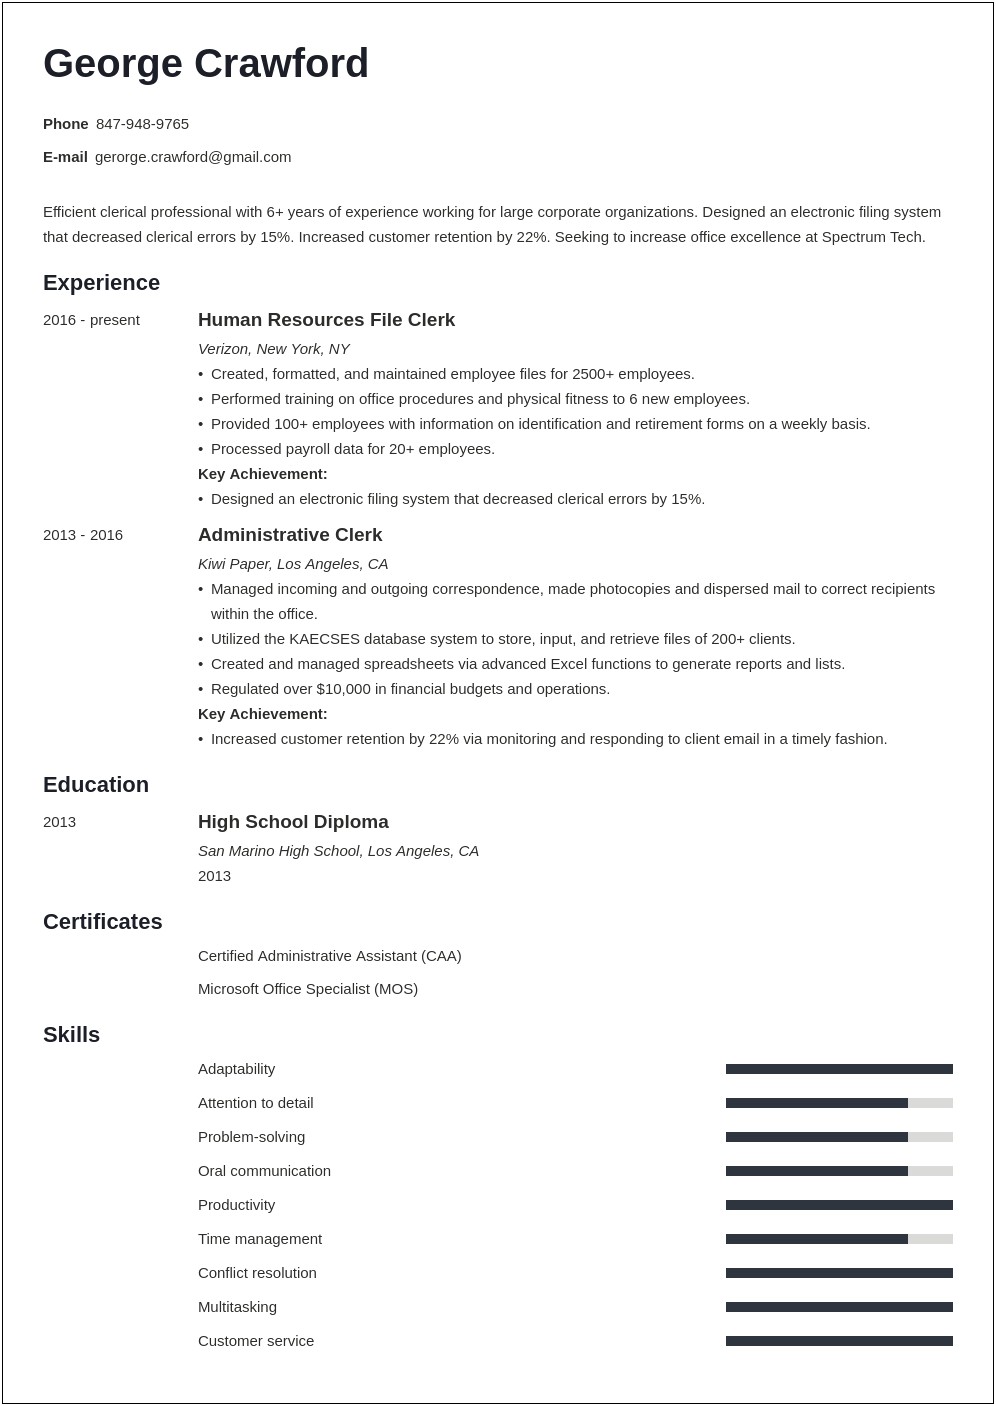 Clerical Staff Job Description For Resume